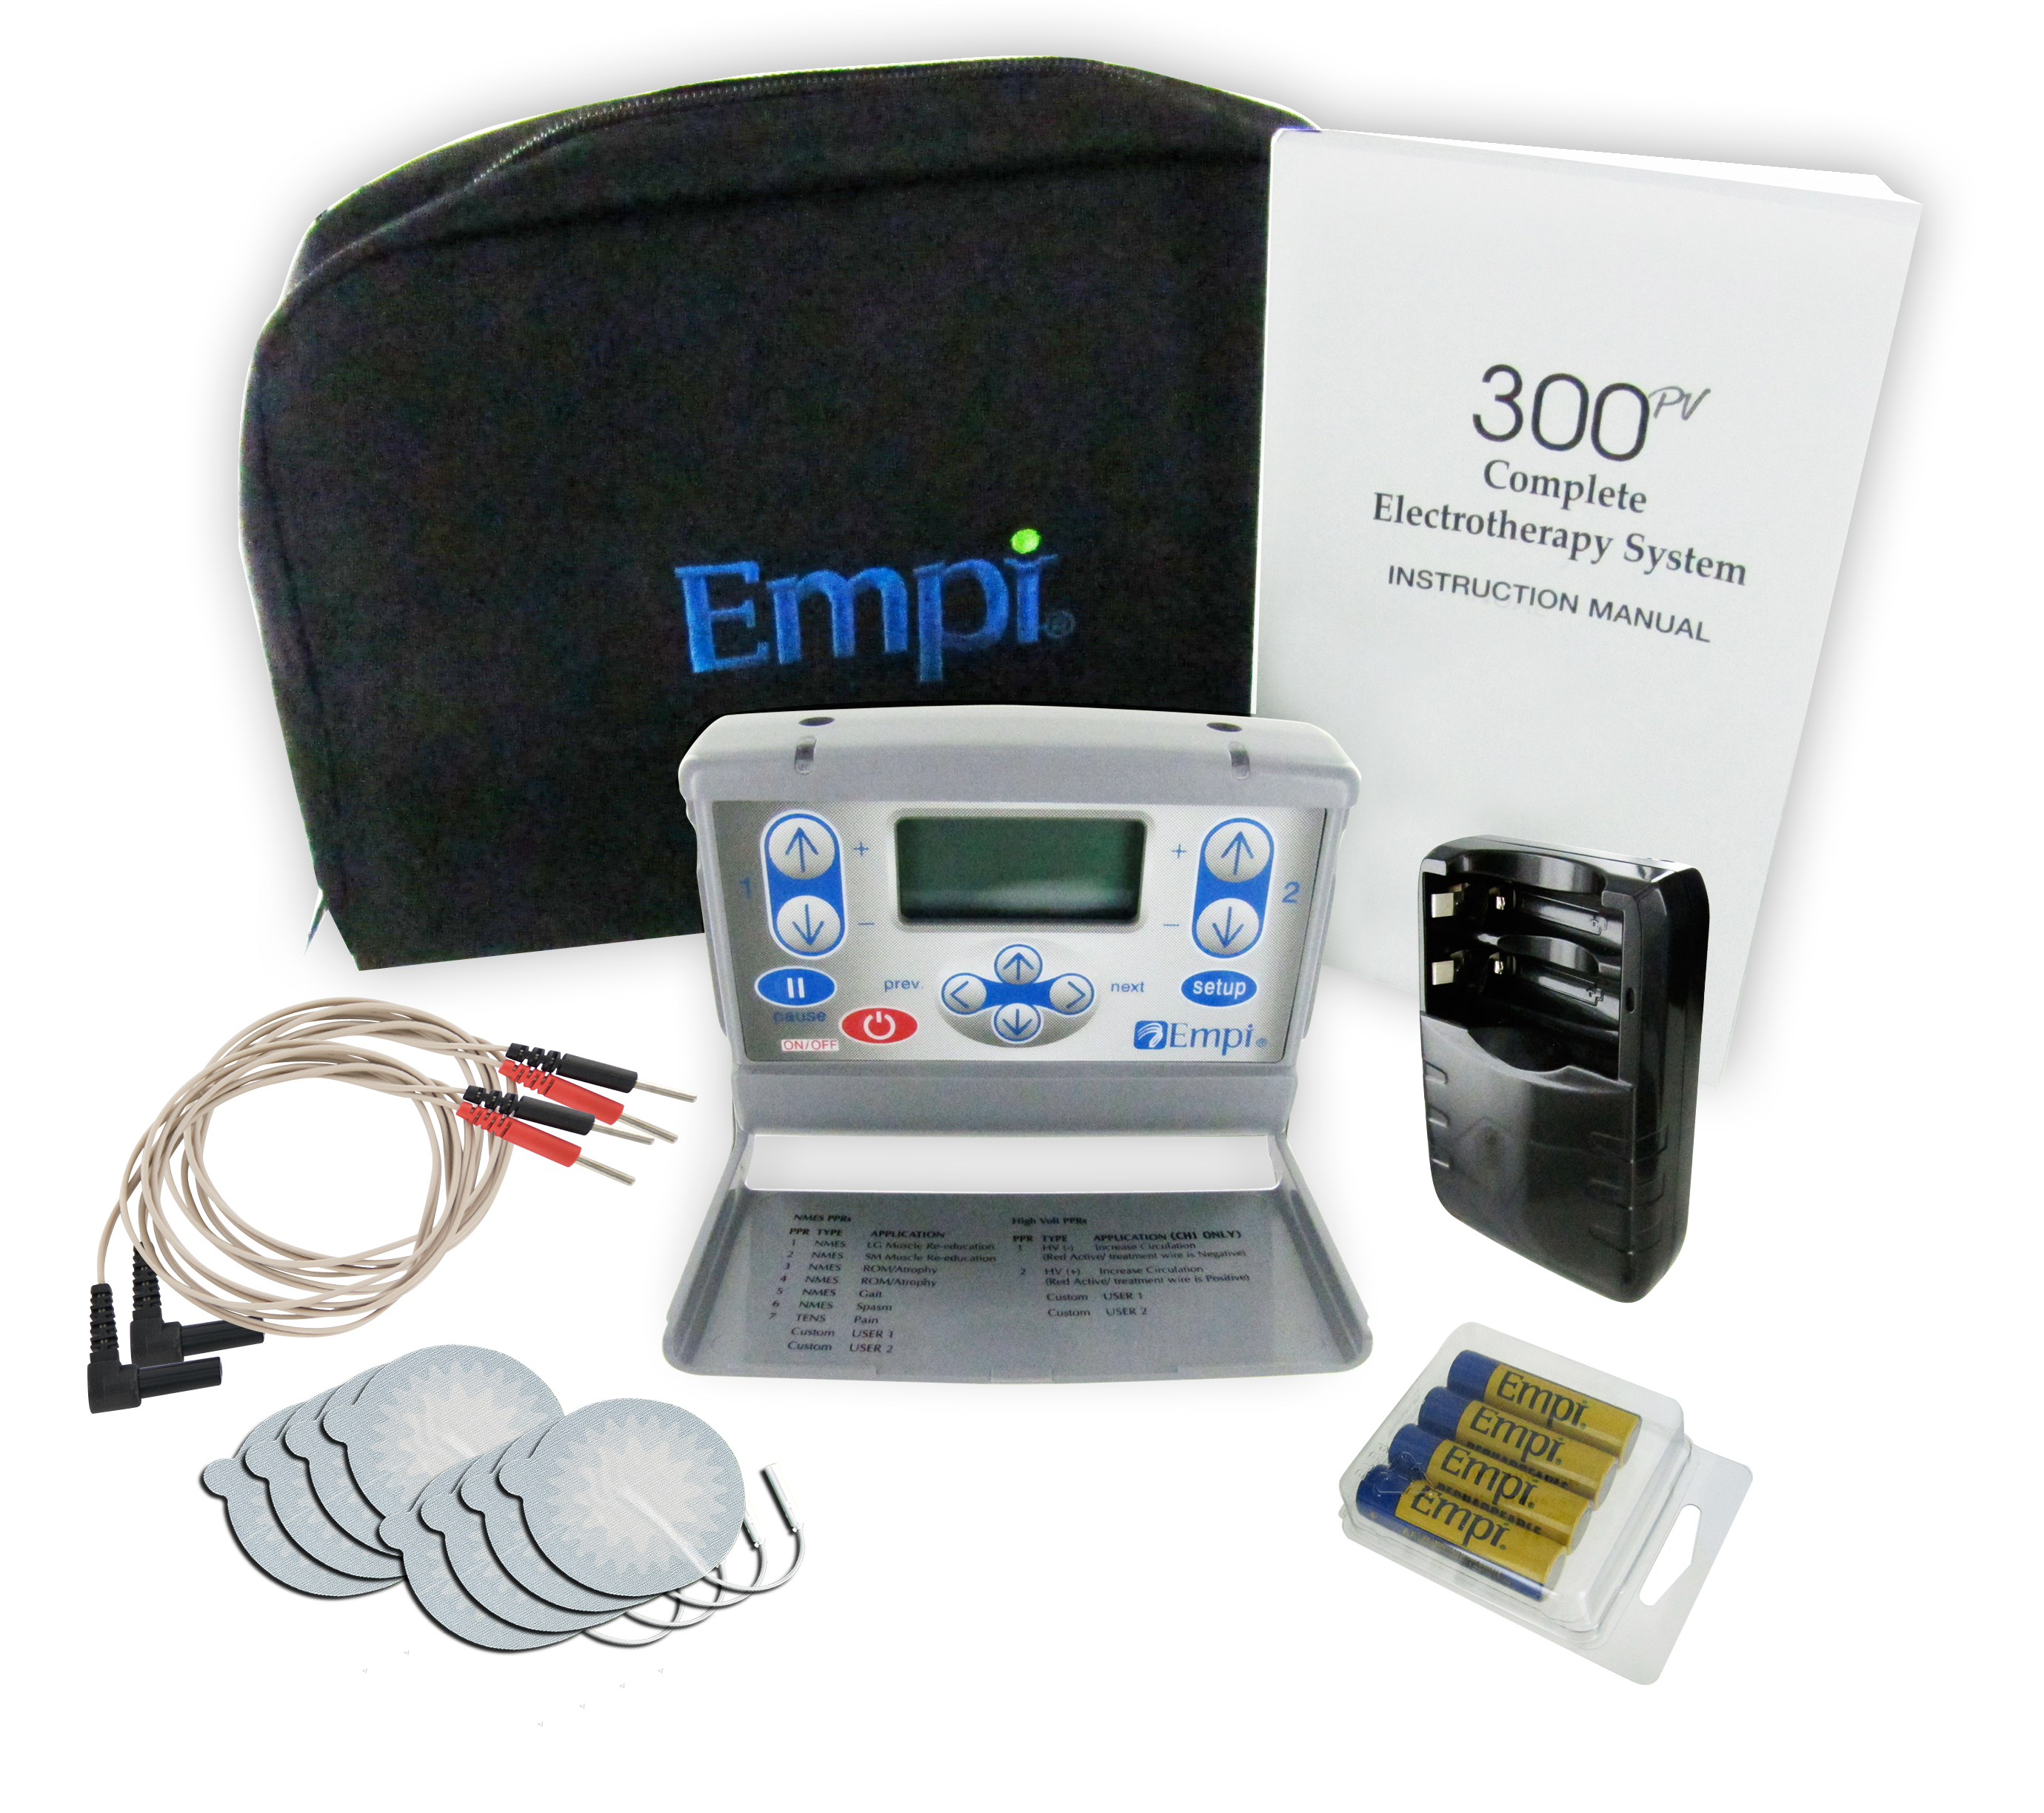  Discount TENS, EMPI Compatible TENS Electrodes, 8